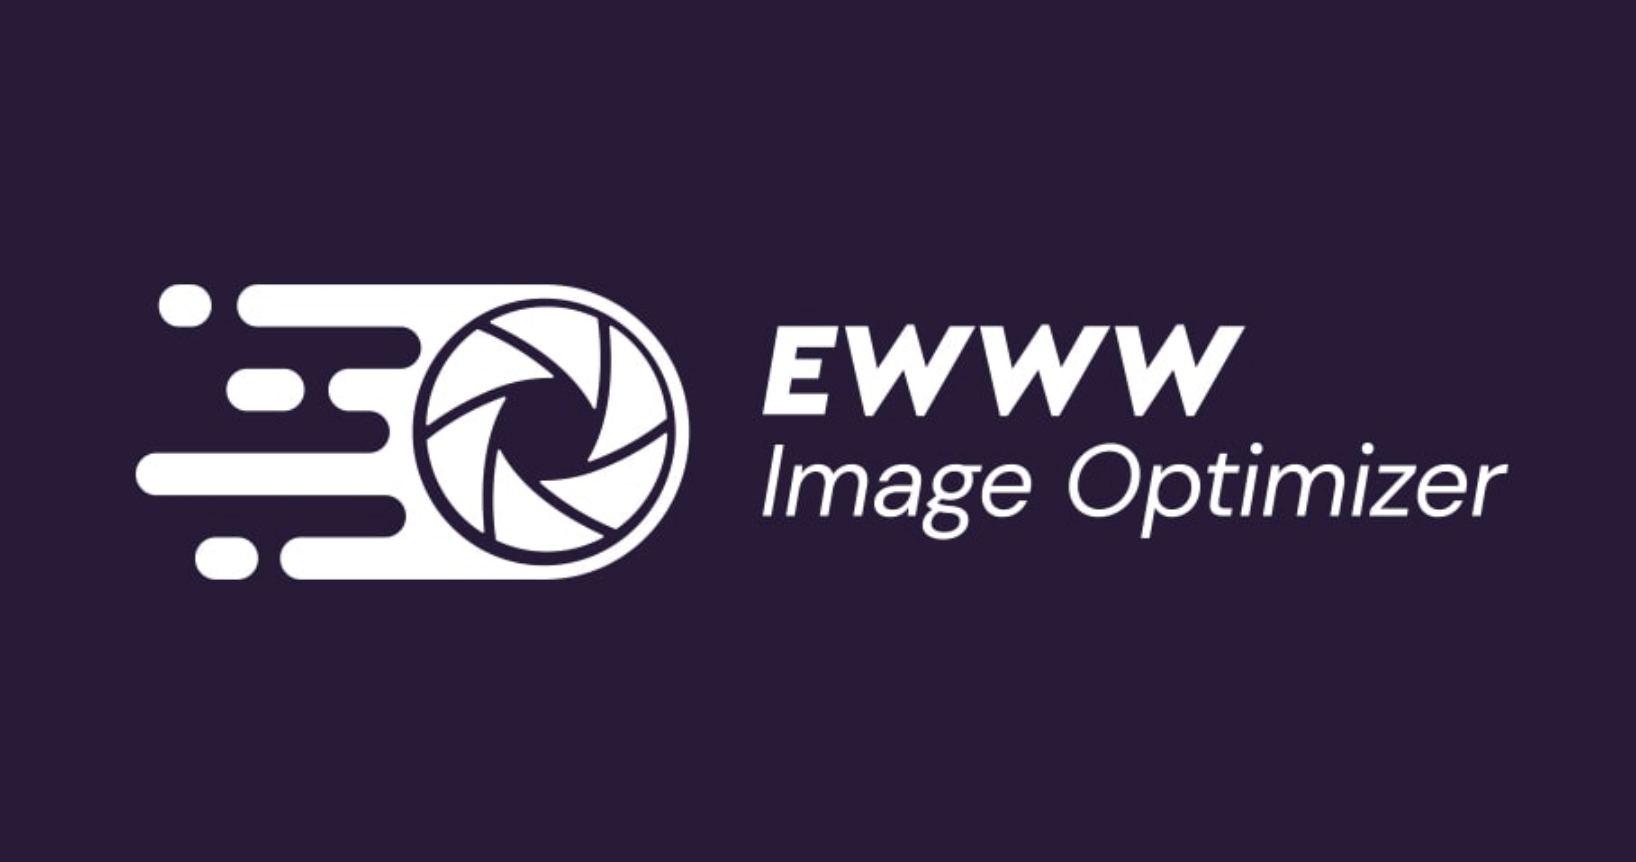 ewww - بهترین افزونه های بهینه کردن عکس های وردپرس